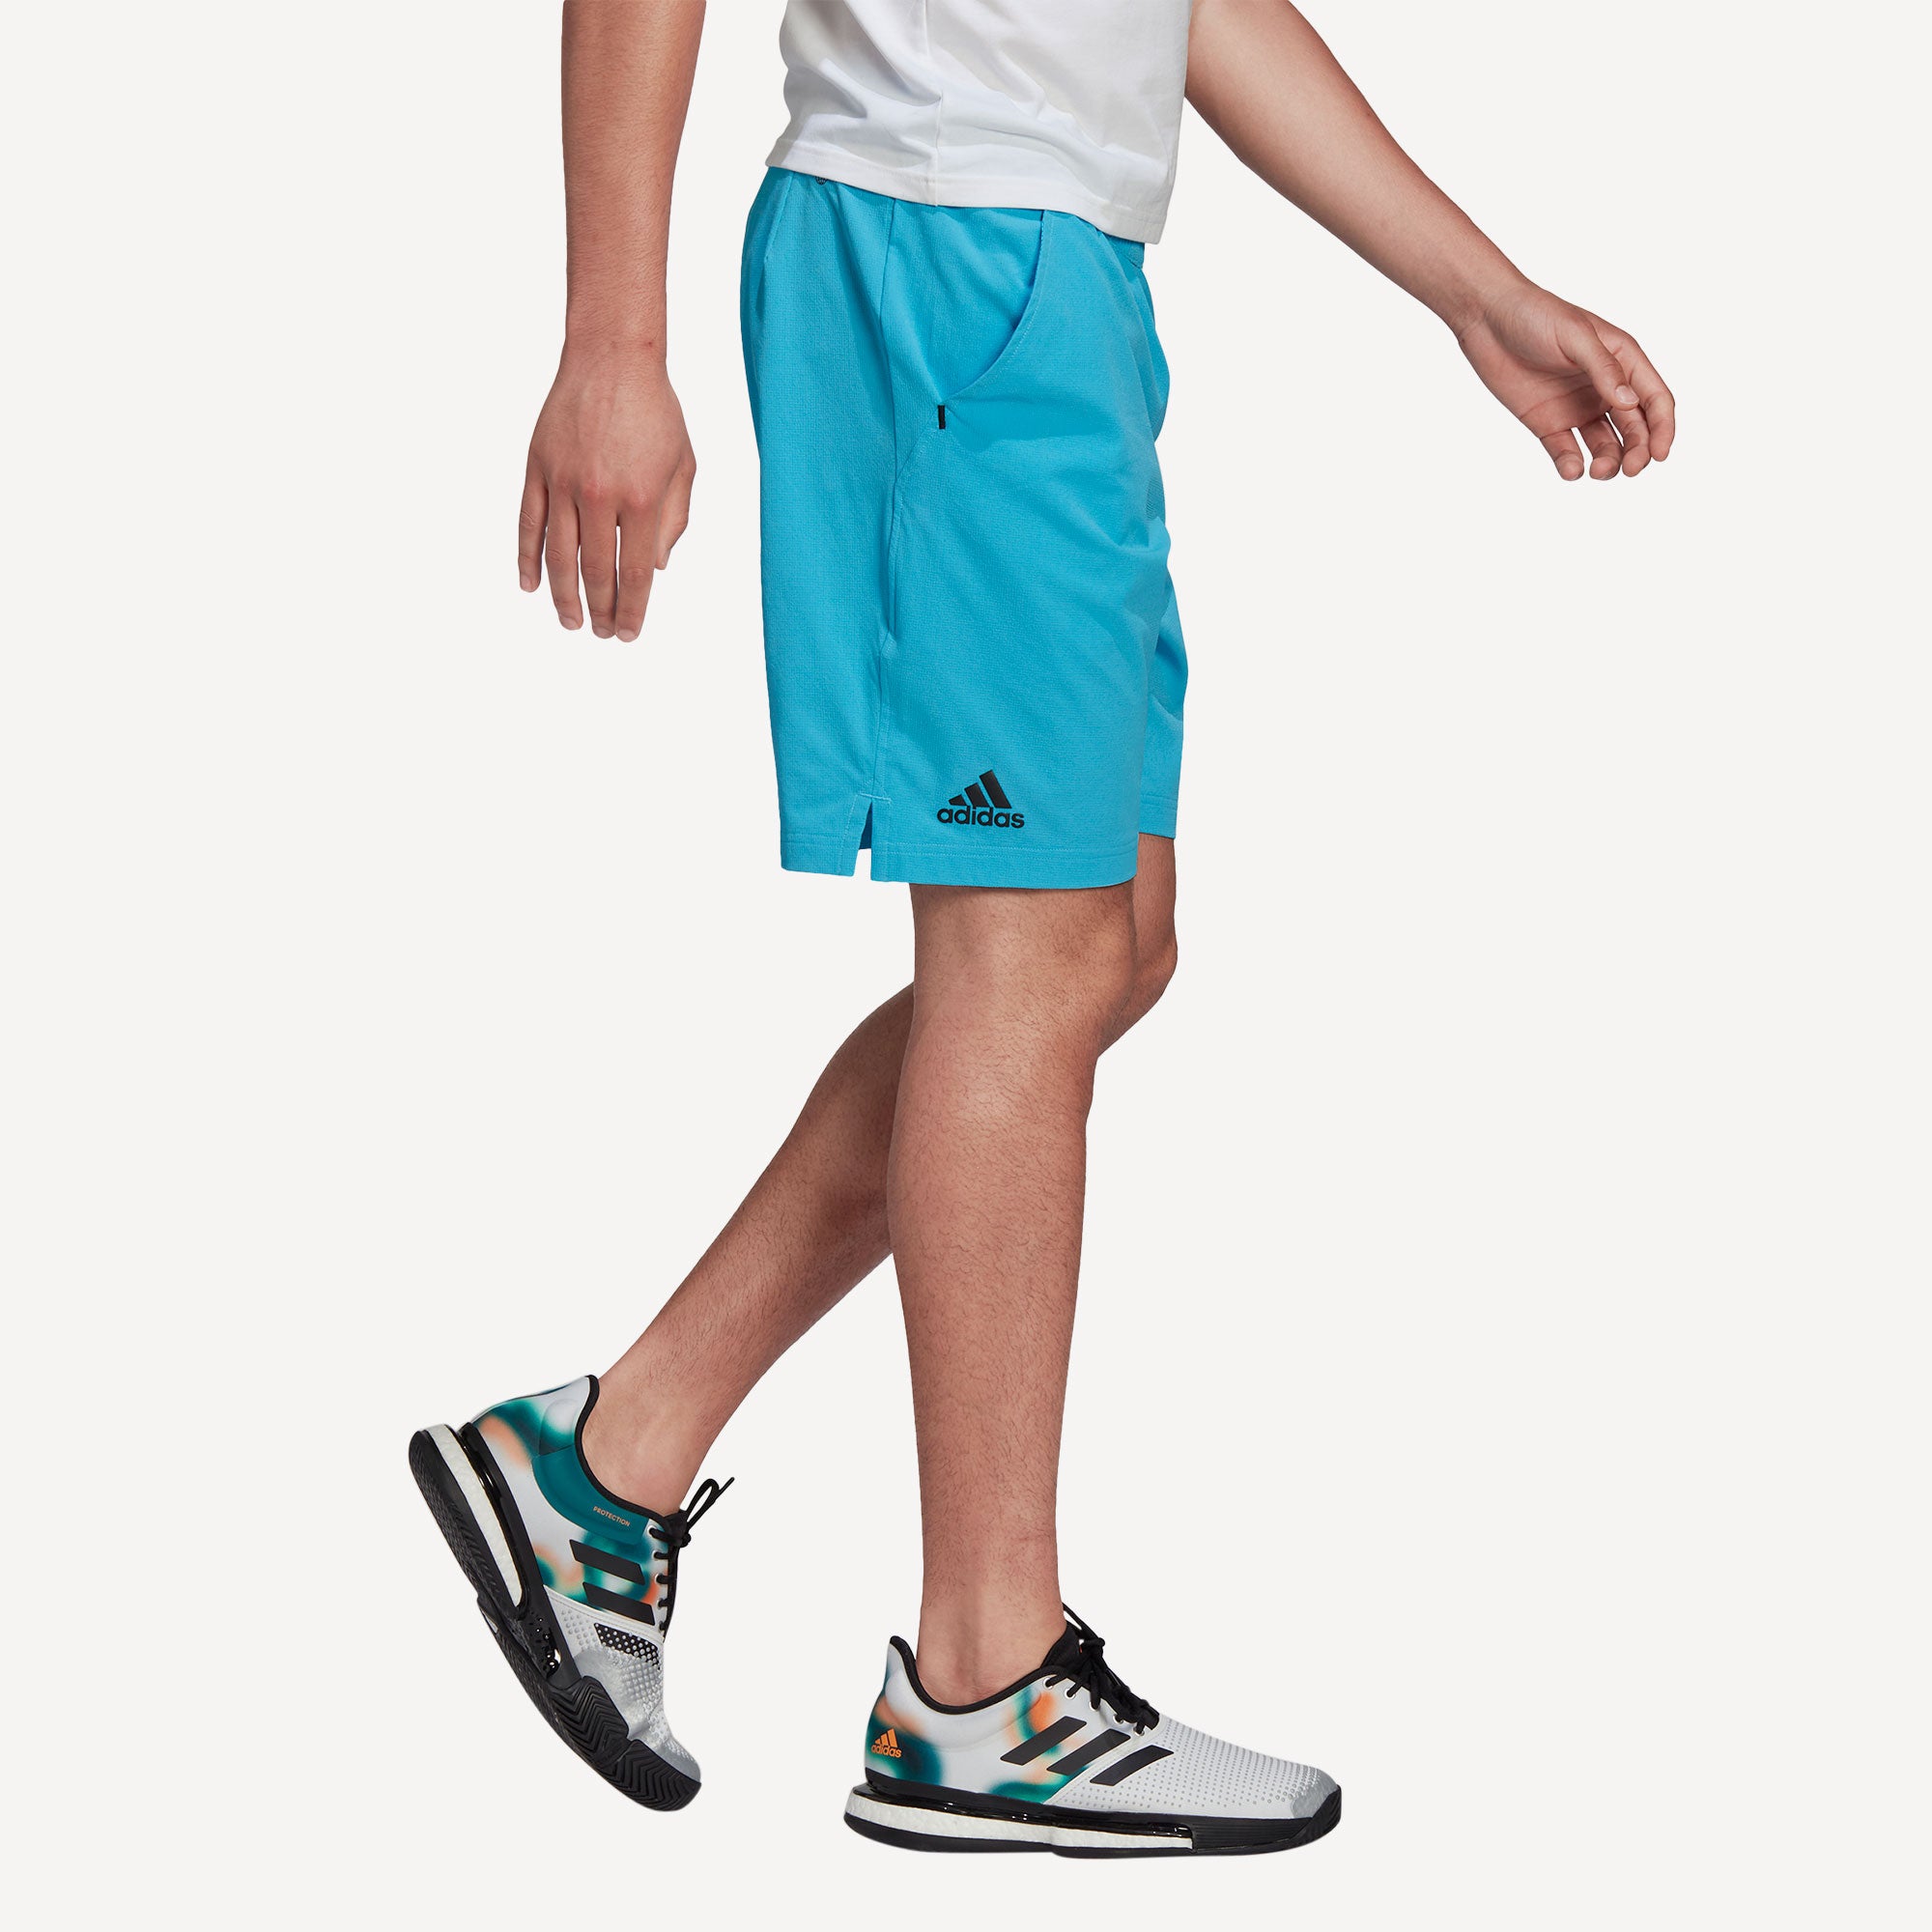 adidas Ergo Men's 9-Inch Tennis Shorts Blue (3)